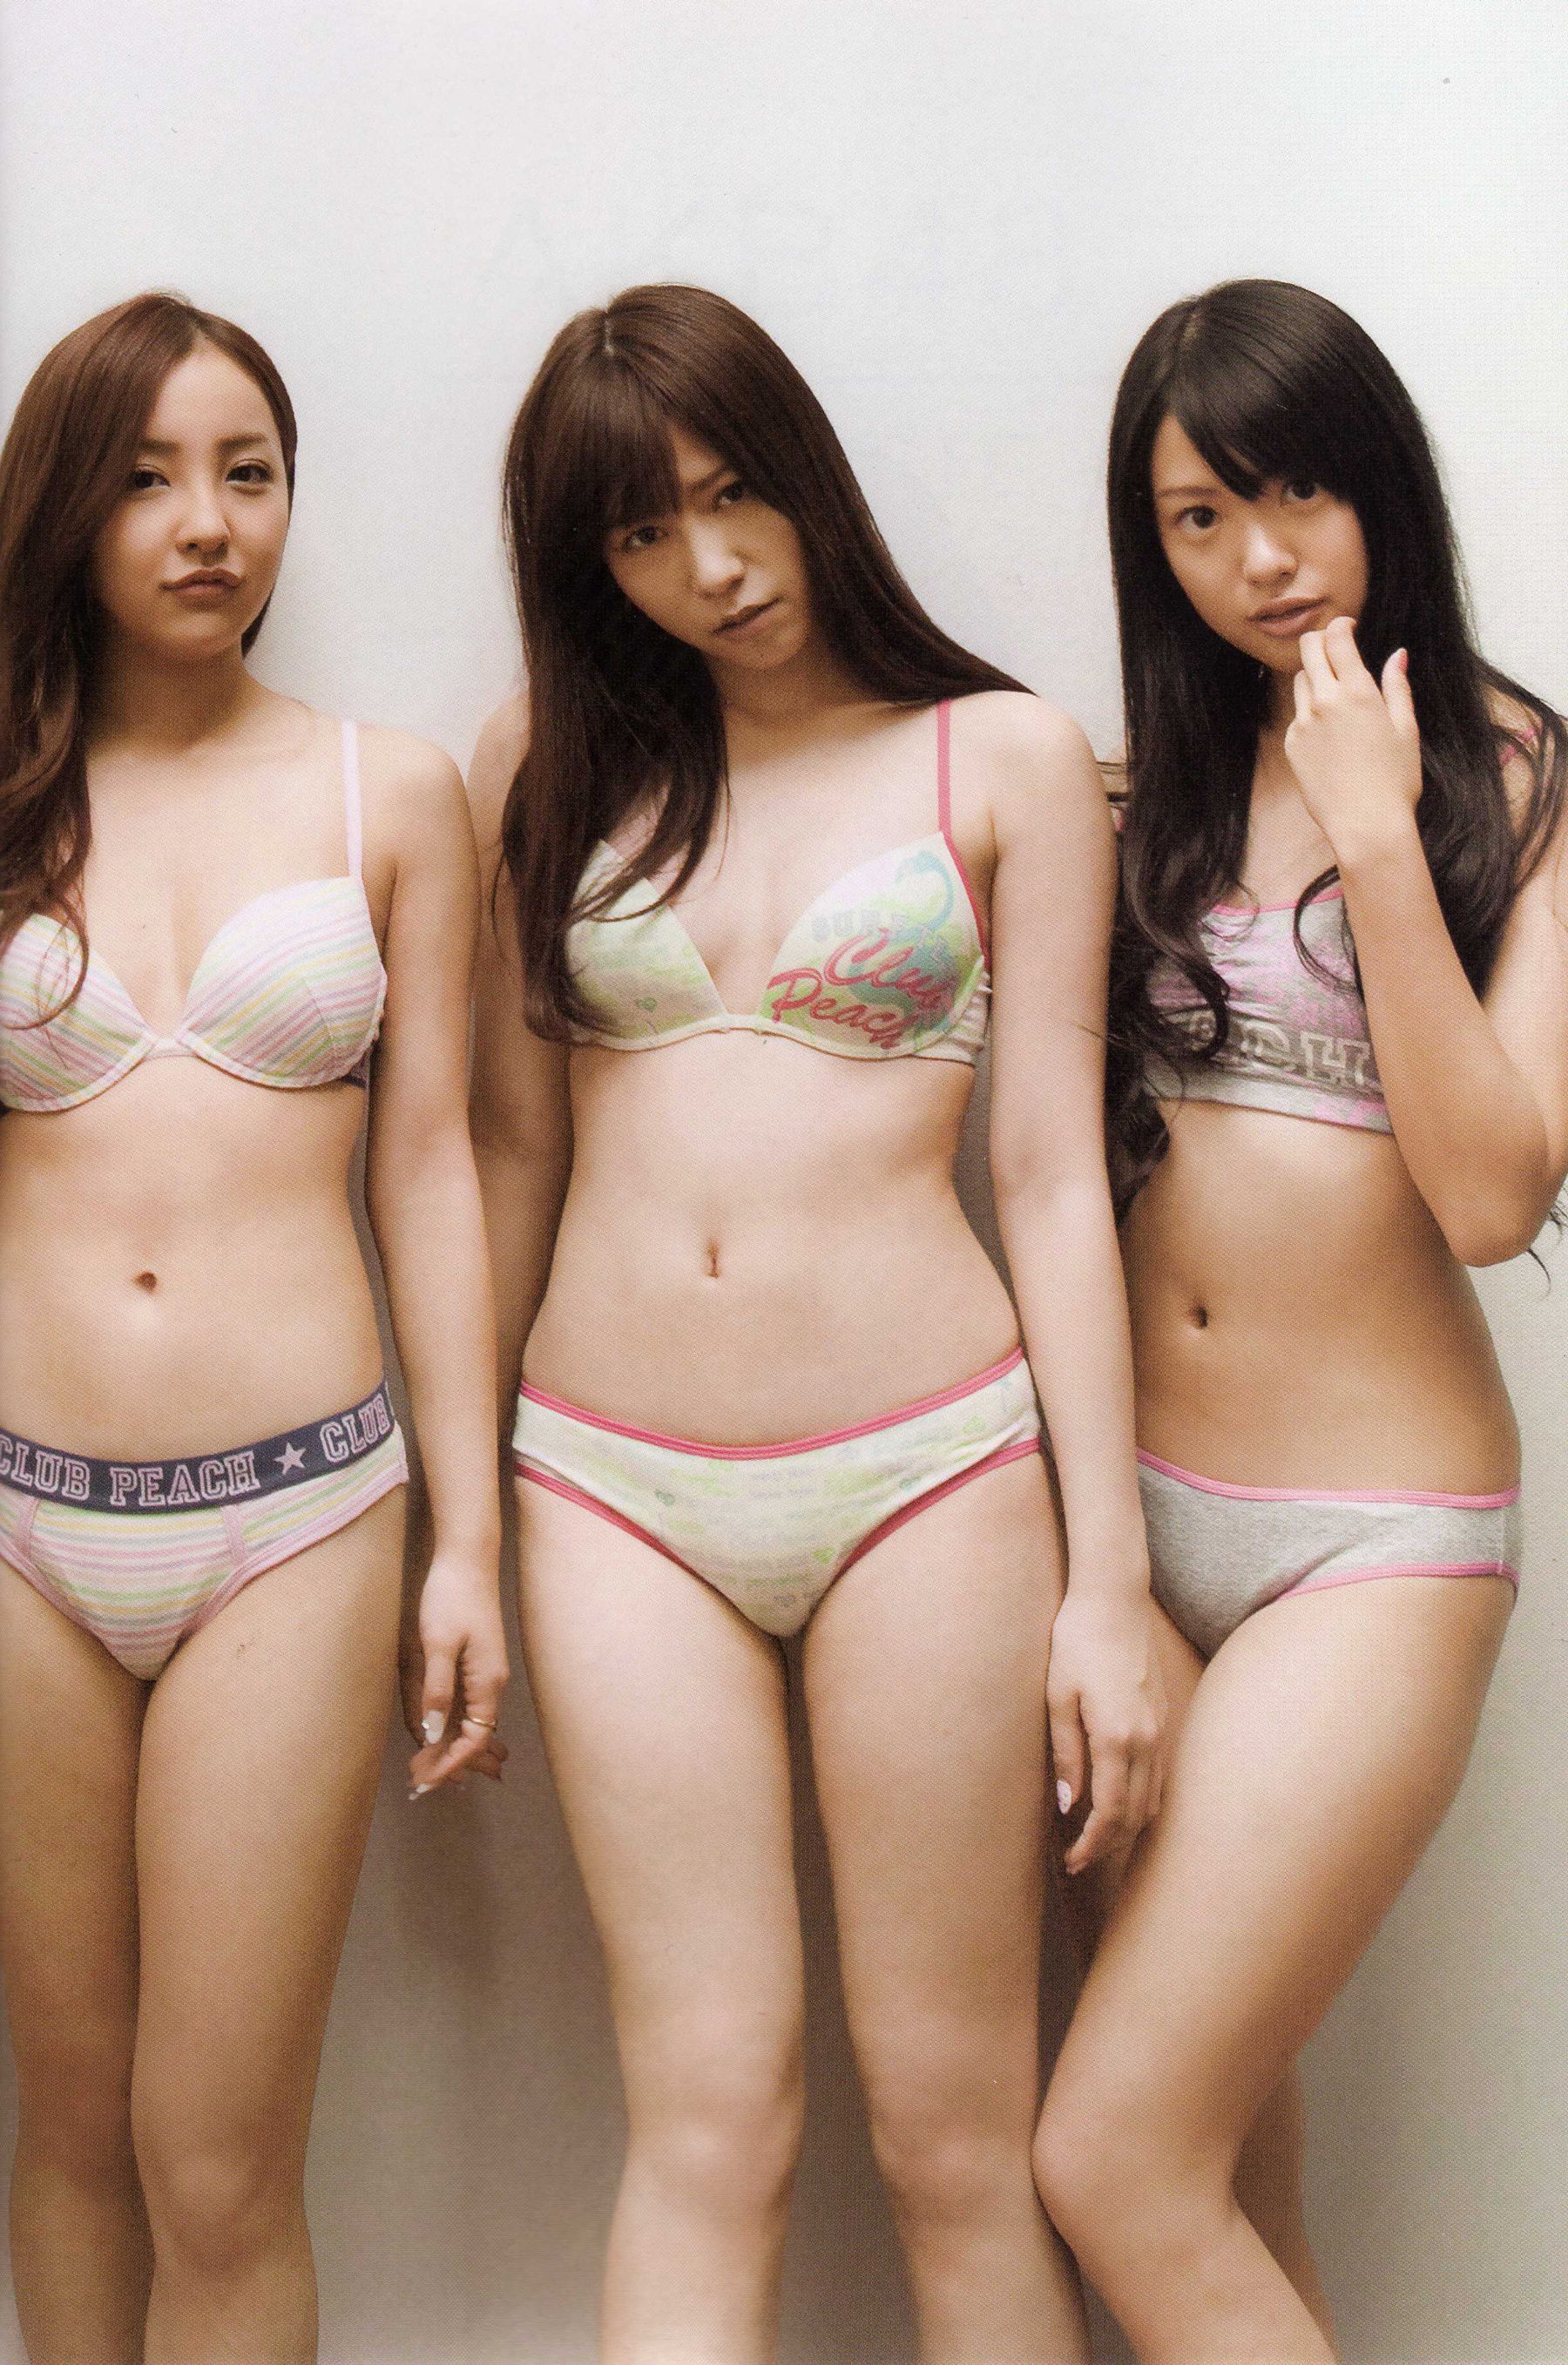 Japan AKB48 girl group "2013 Fashion Book Underwear Show" - Image...